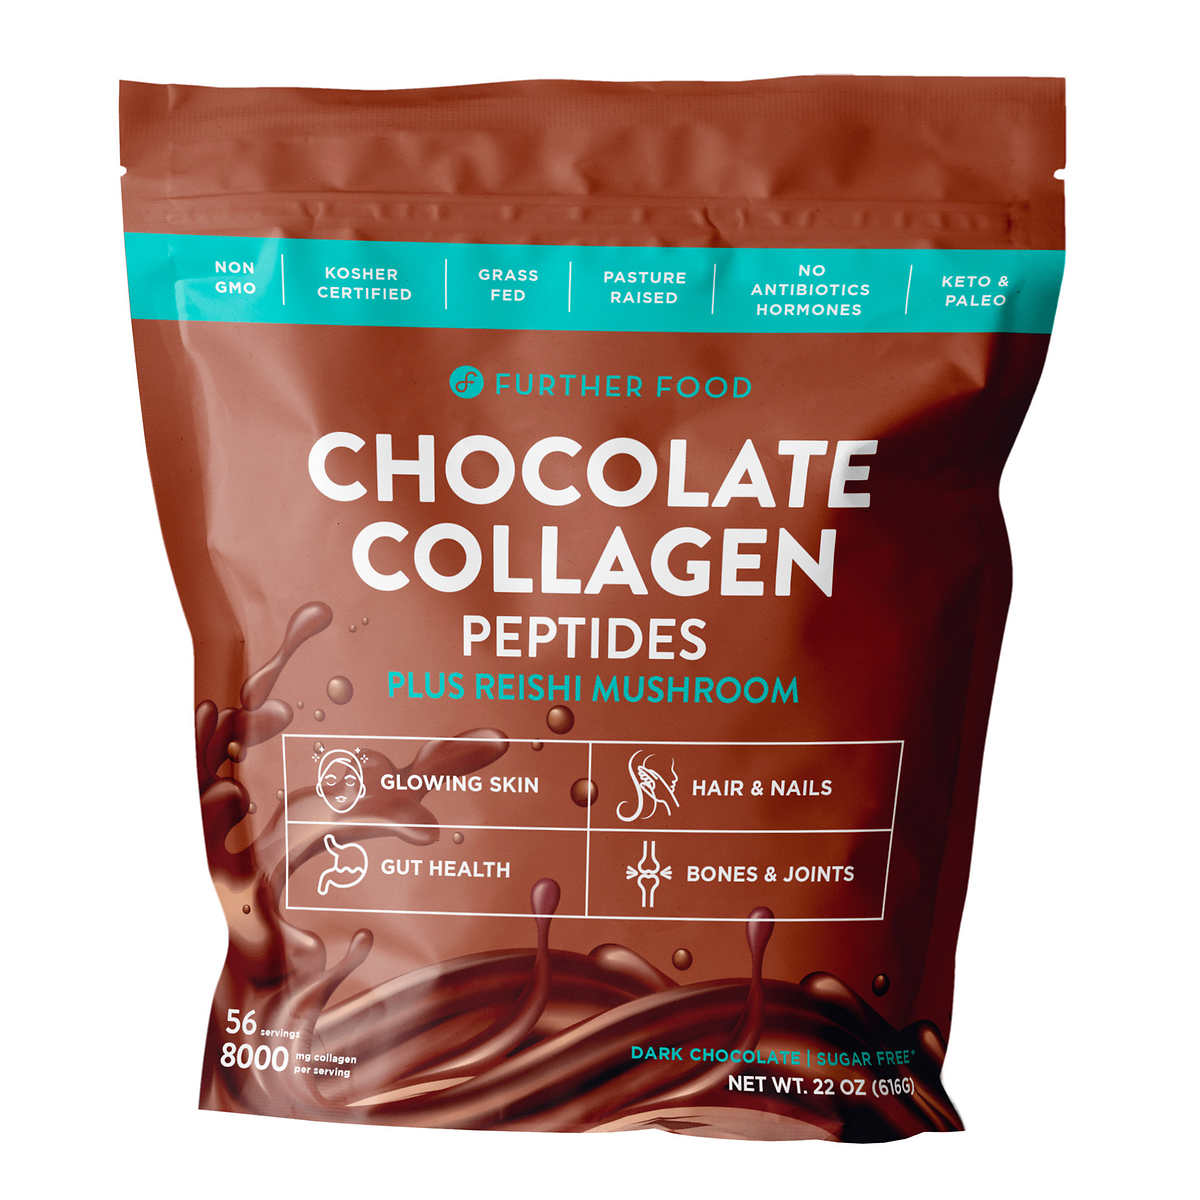 Bột Uống Làm Đẹp Da Further Food Chocolate Collagen Peptides imageservice jpg 1603856012 28102020103332